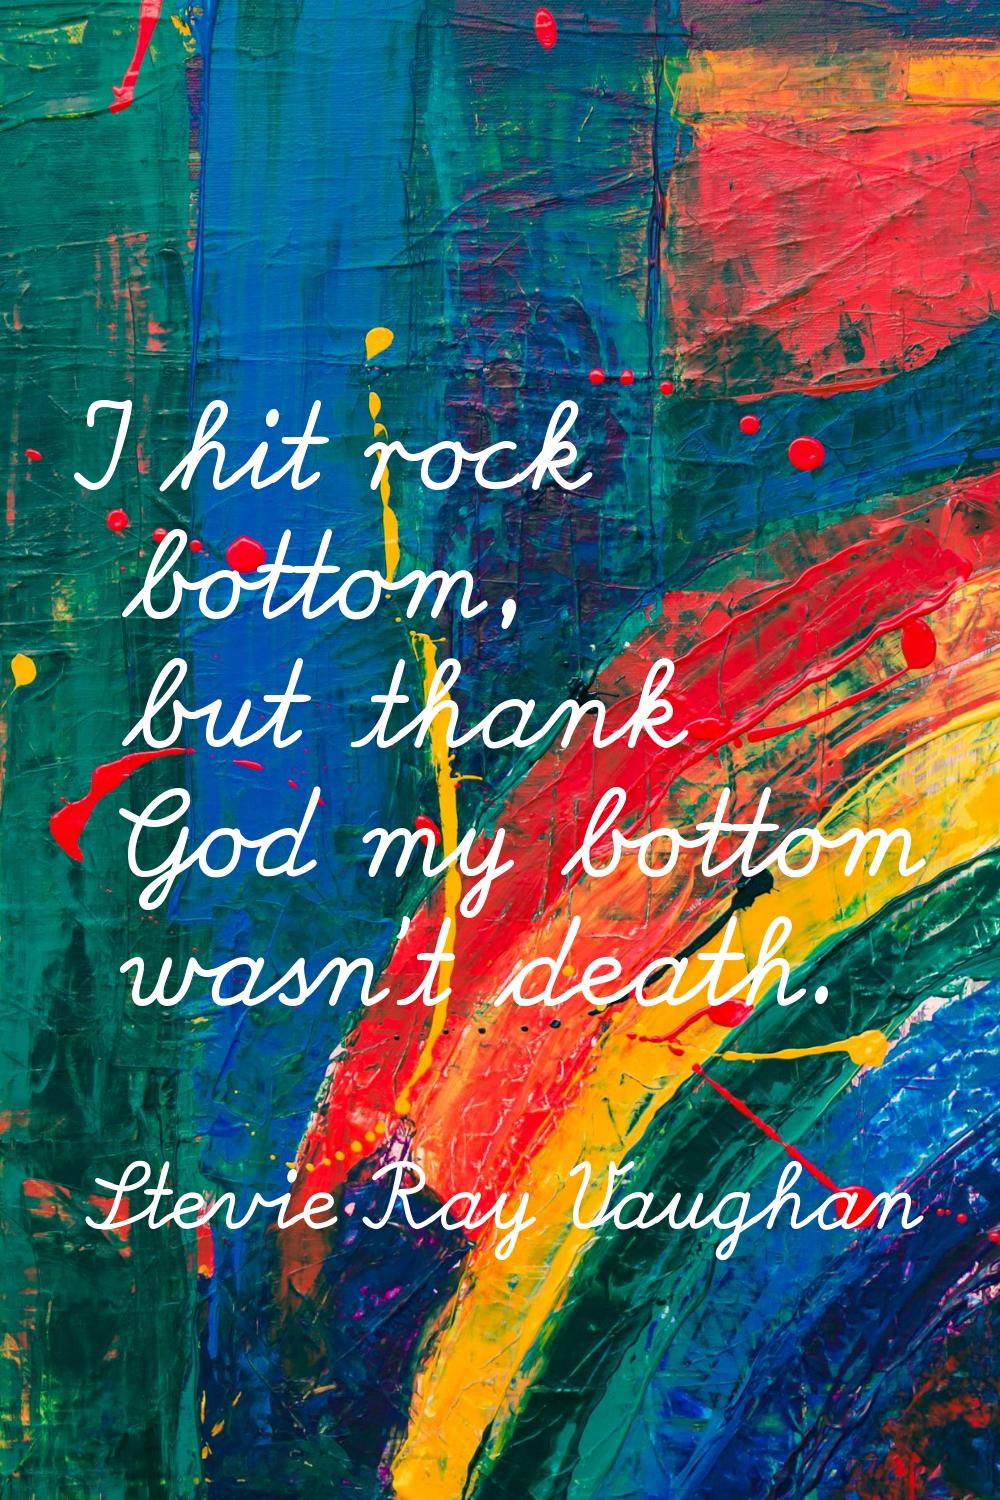 I hit rock bottom, but thank God my bottom wasn't death.